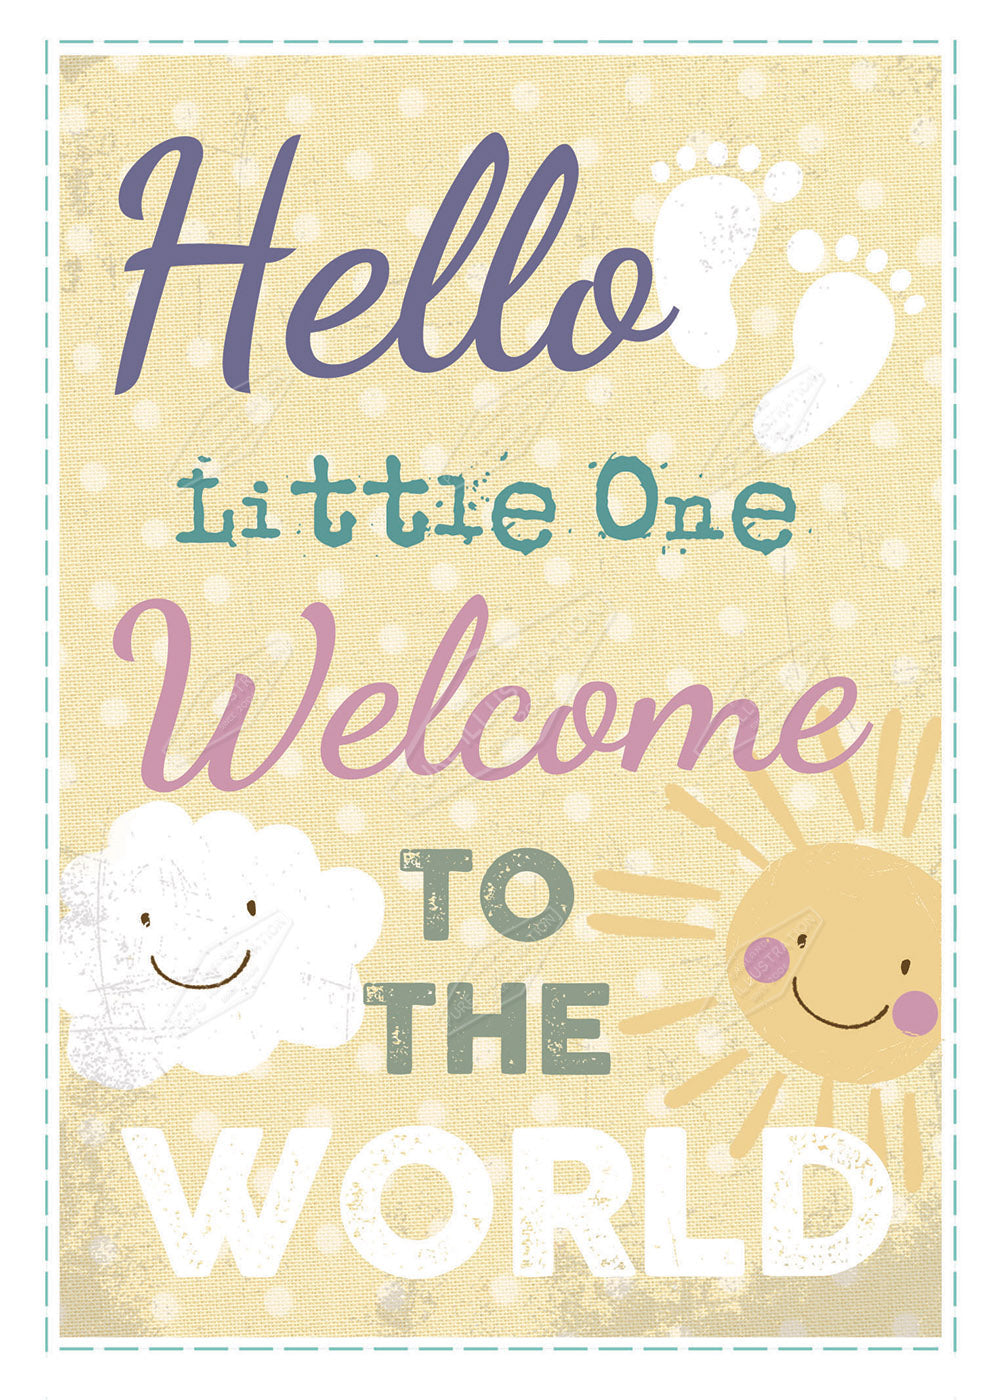 00027830DEV - Deva Evans is represented by Pure Art Licensing Agency - New Baby Greeting Card Design